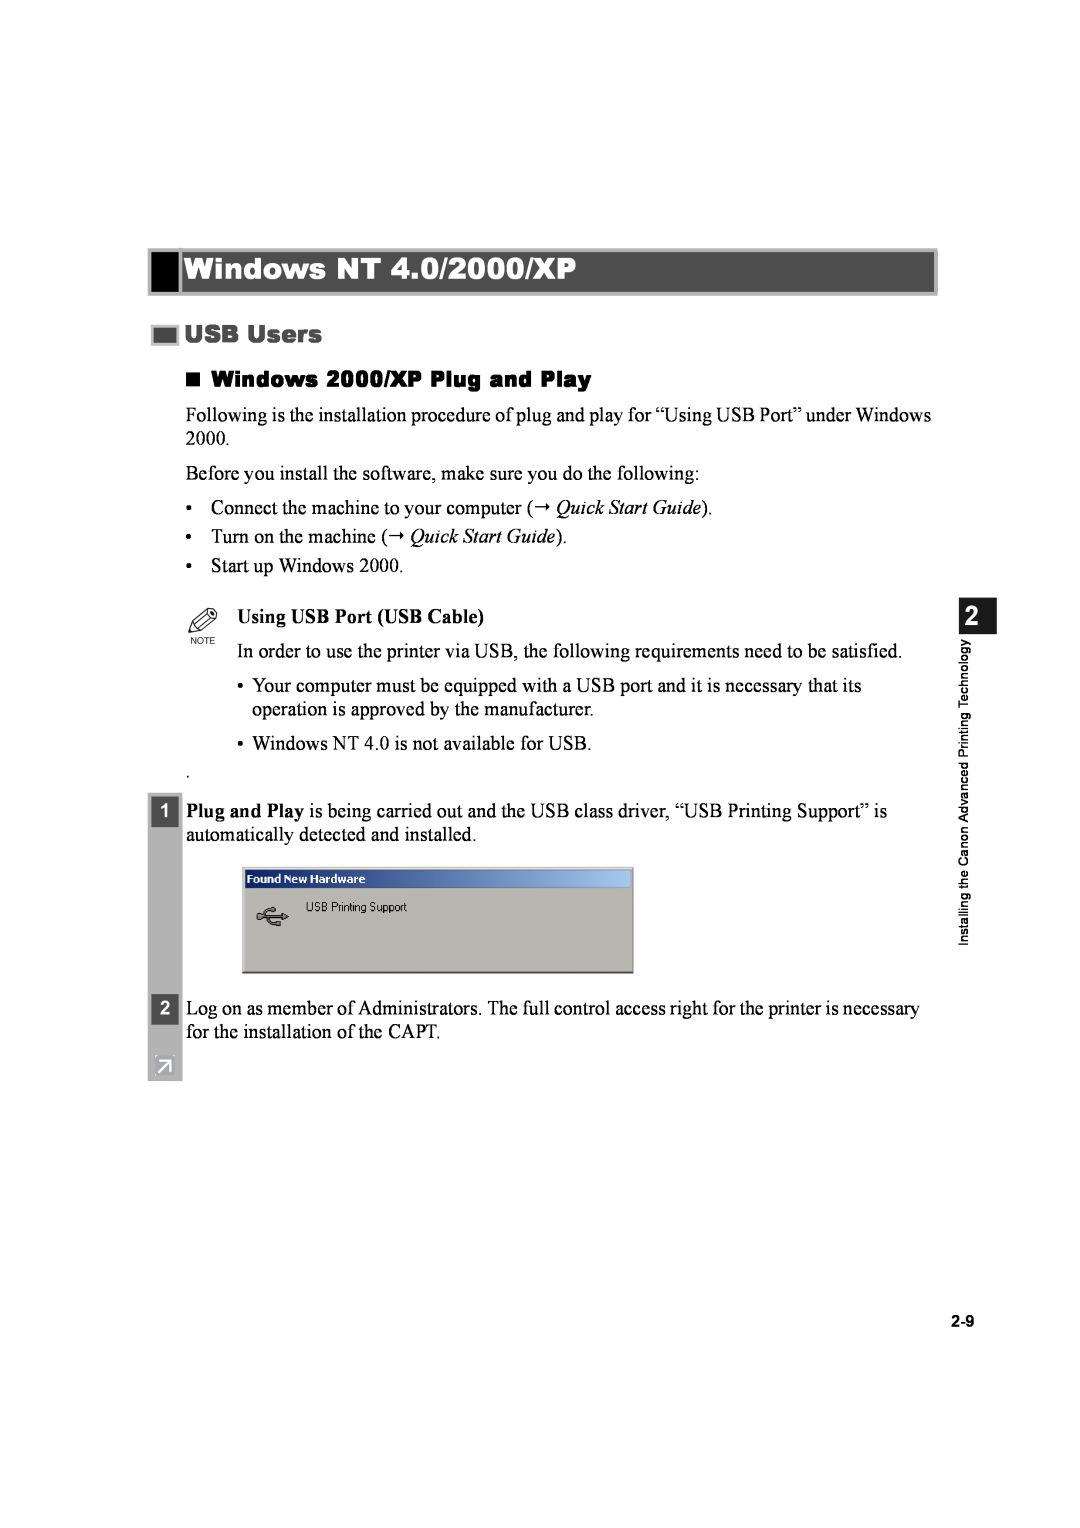 Canon D600 manual Windows NT 4.0/2000/XP, Windows 2000/XP Plug and Play, USB Users, Using USB Port USB Cable 